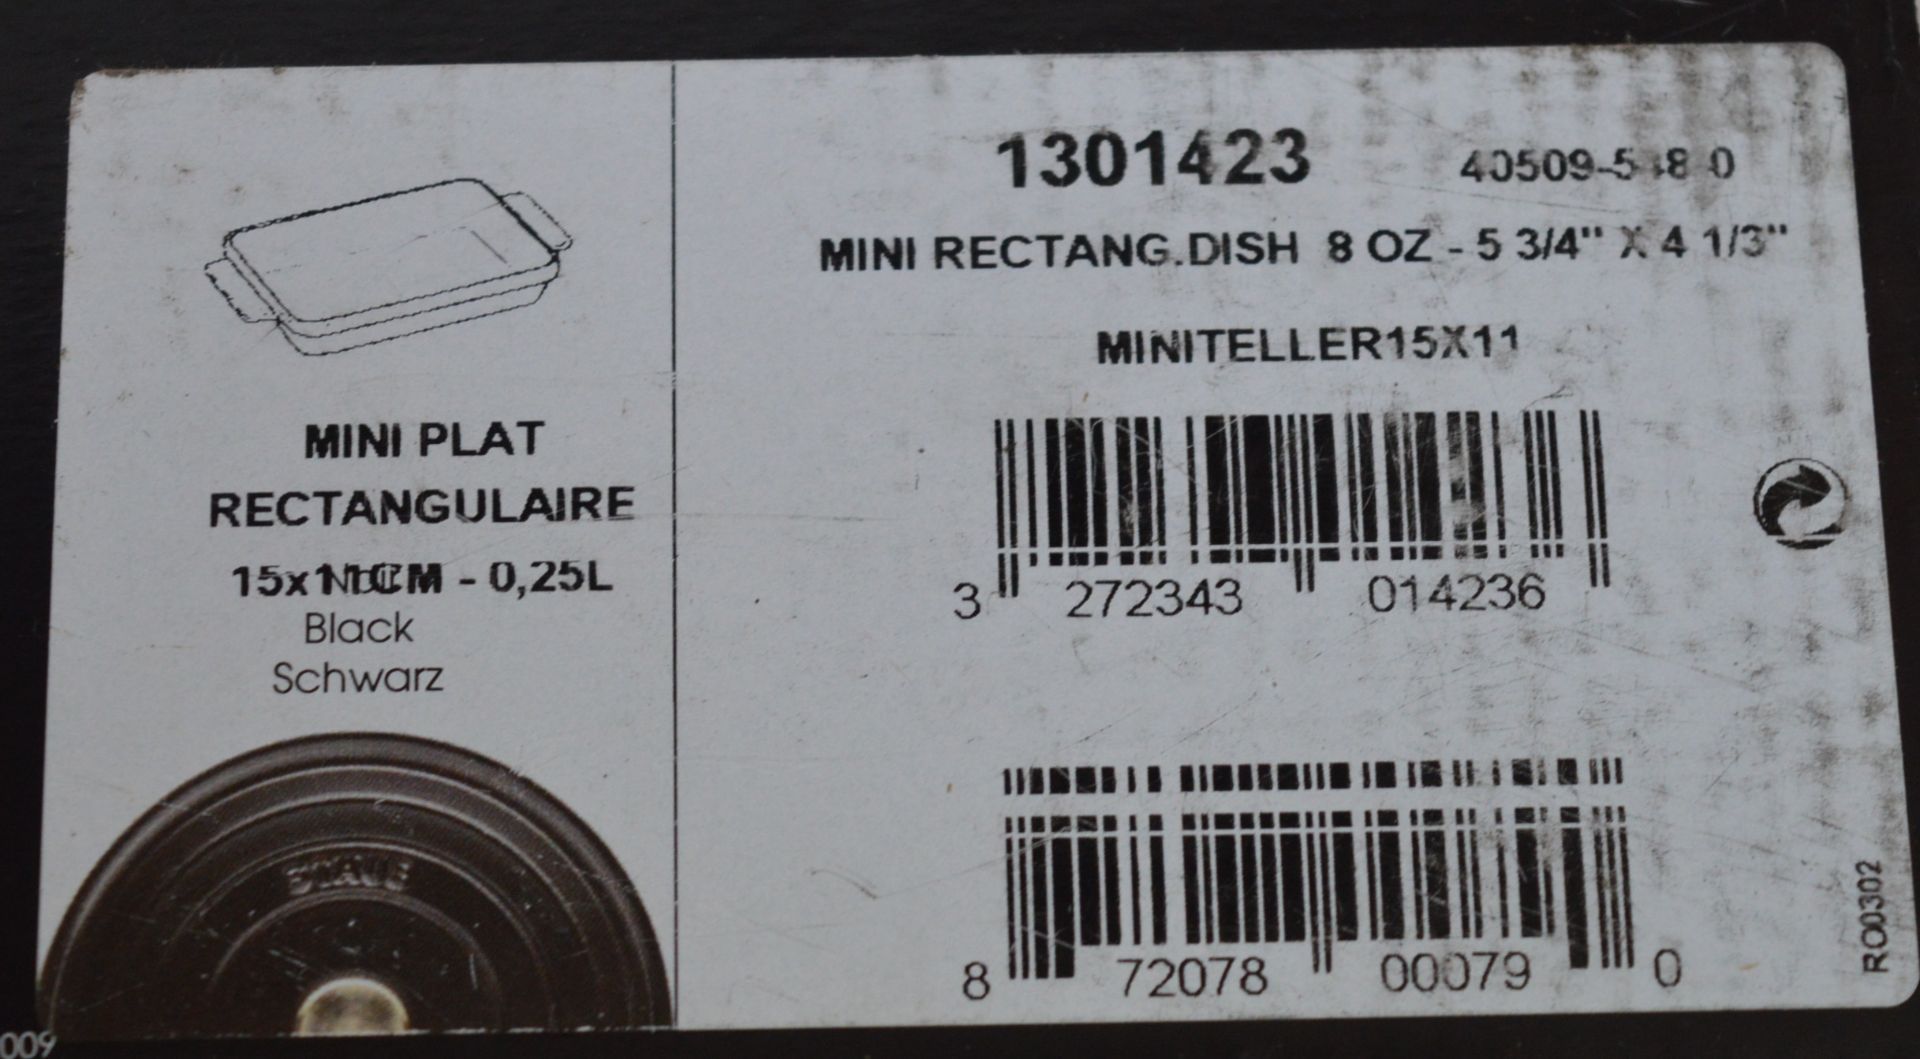 1 x Staub Cast Iron Mini Rectangular Basking Roasting Dish - New Boxed Stock - CL158 - Attractive Fr - Image 12 of 18